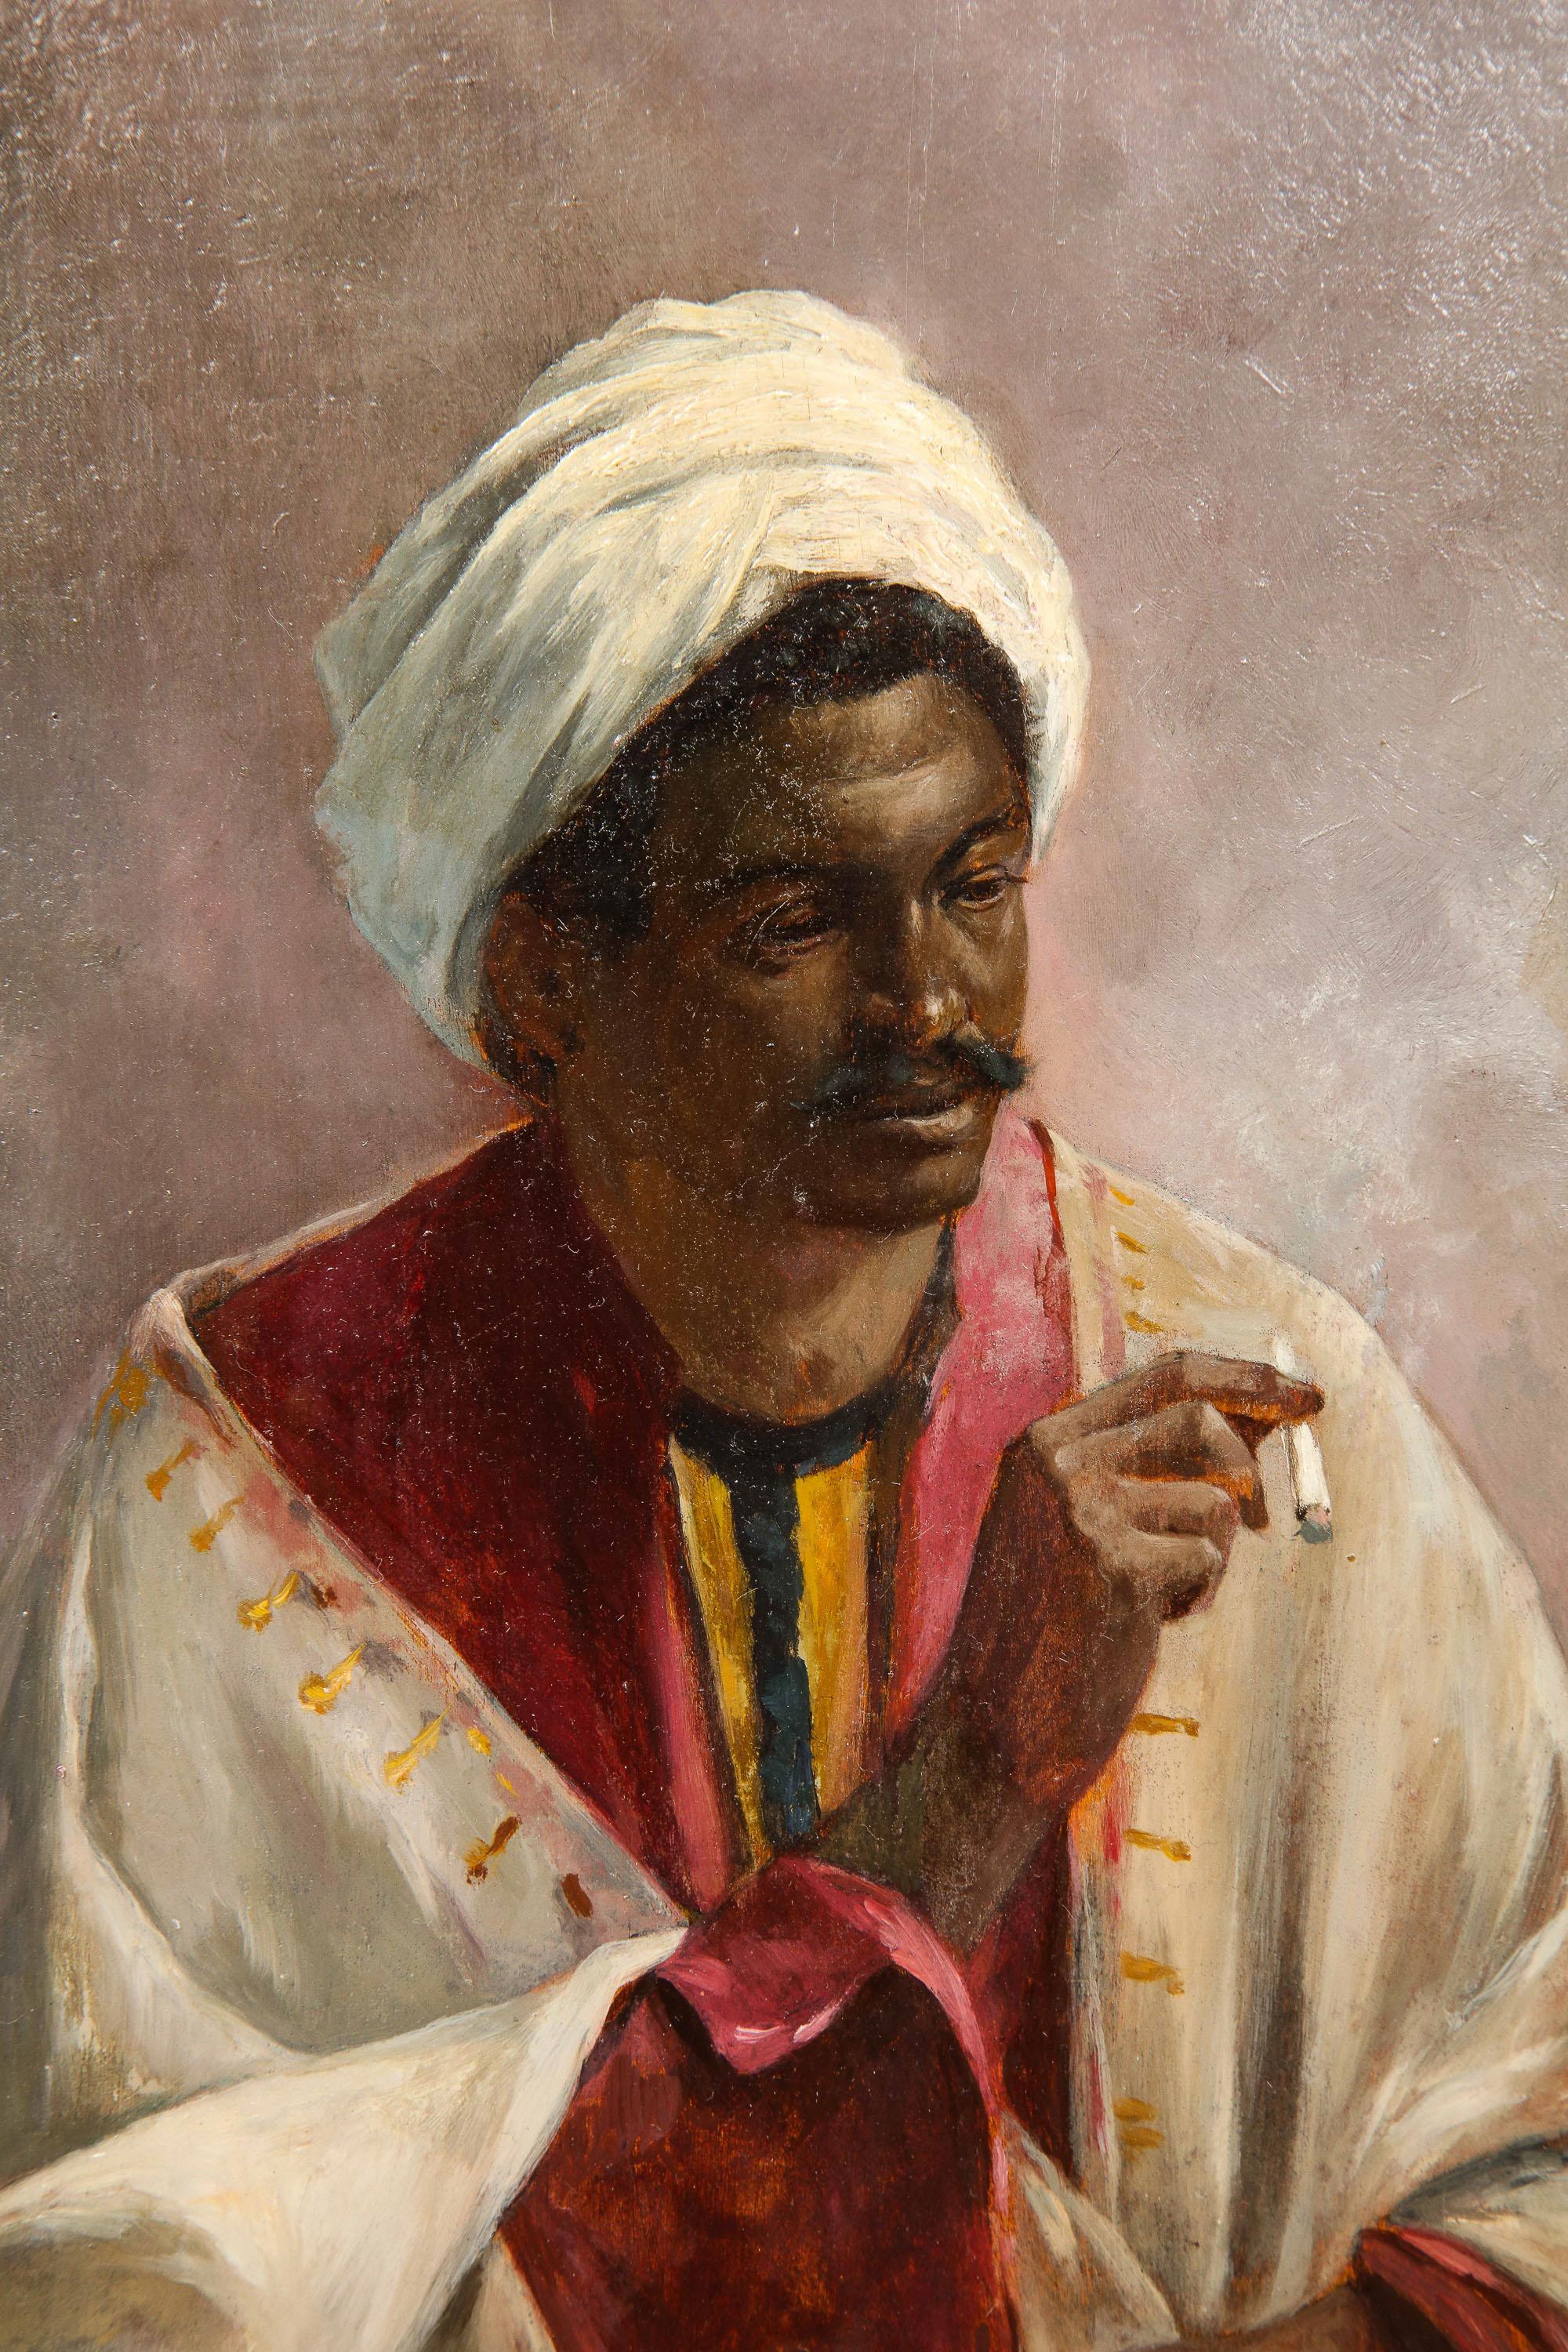 A Ferres, Portrait of a Moorish Man Smoking, Orientalist Painting, 19th century.

Oil on board, In original frame.

Board: 10